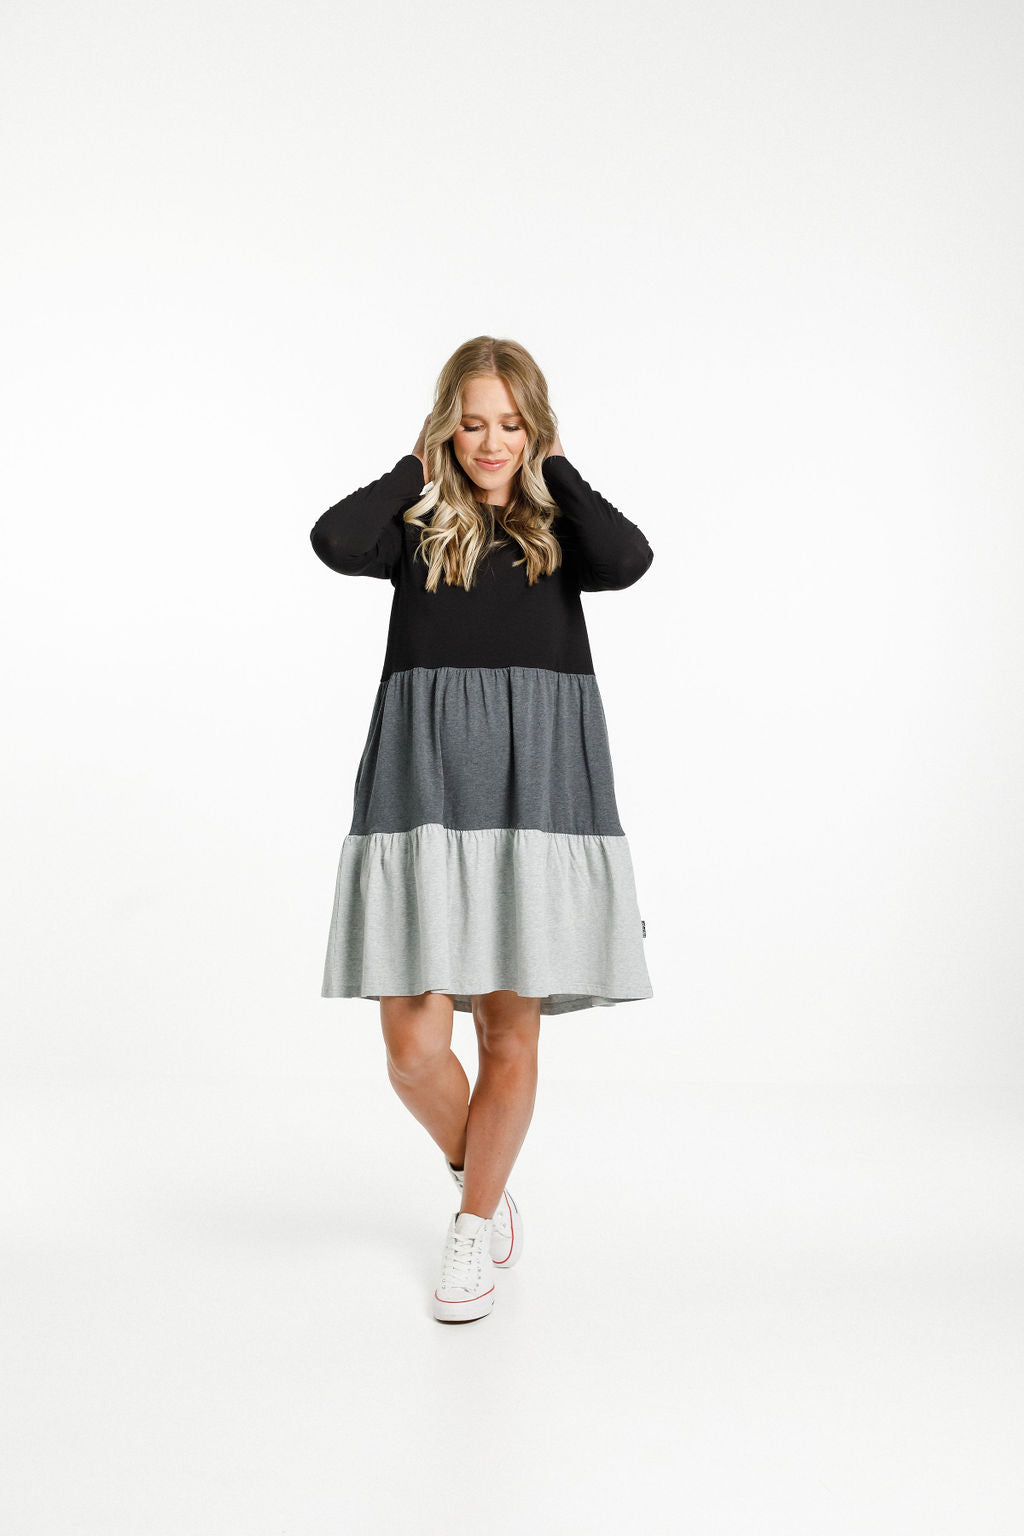 Long Sleeve Kylie Dress - Black/Charcoal/Grey